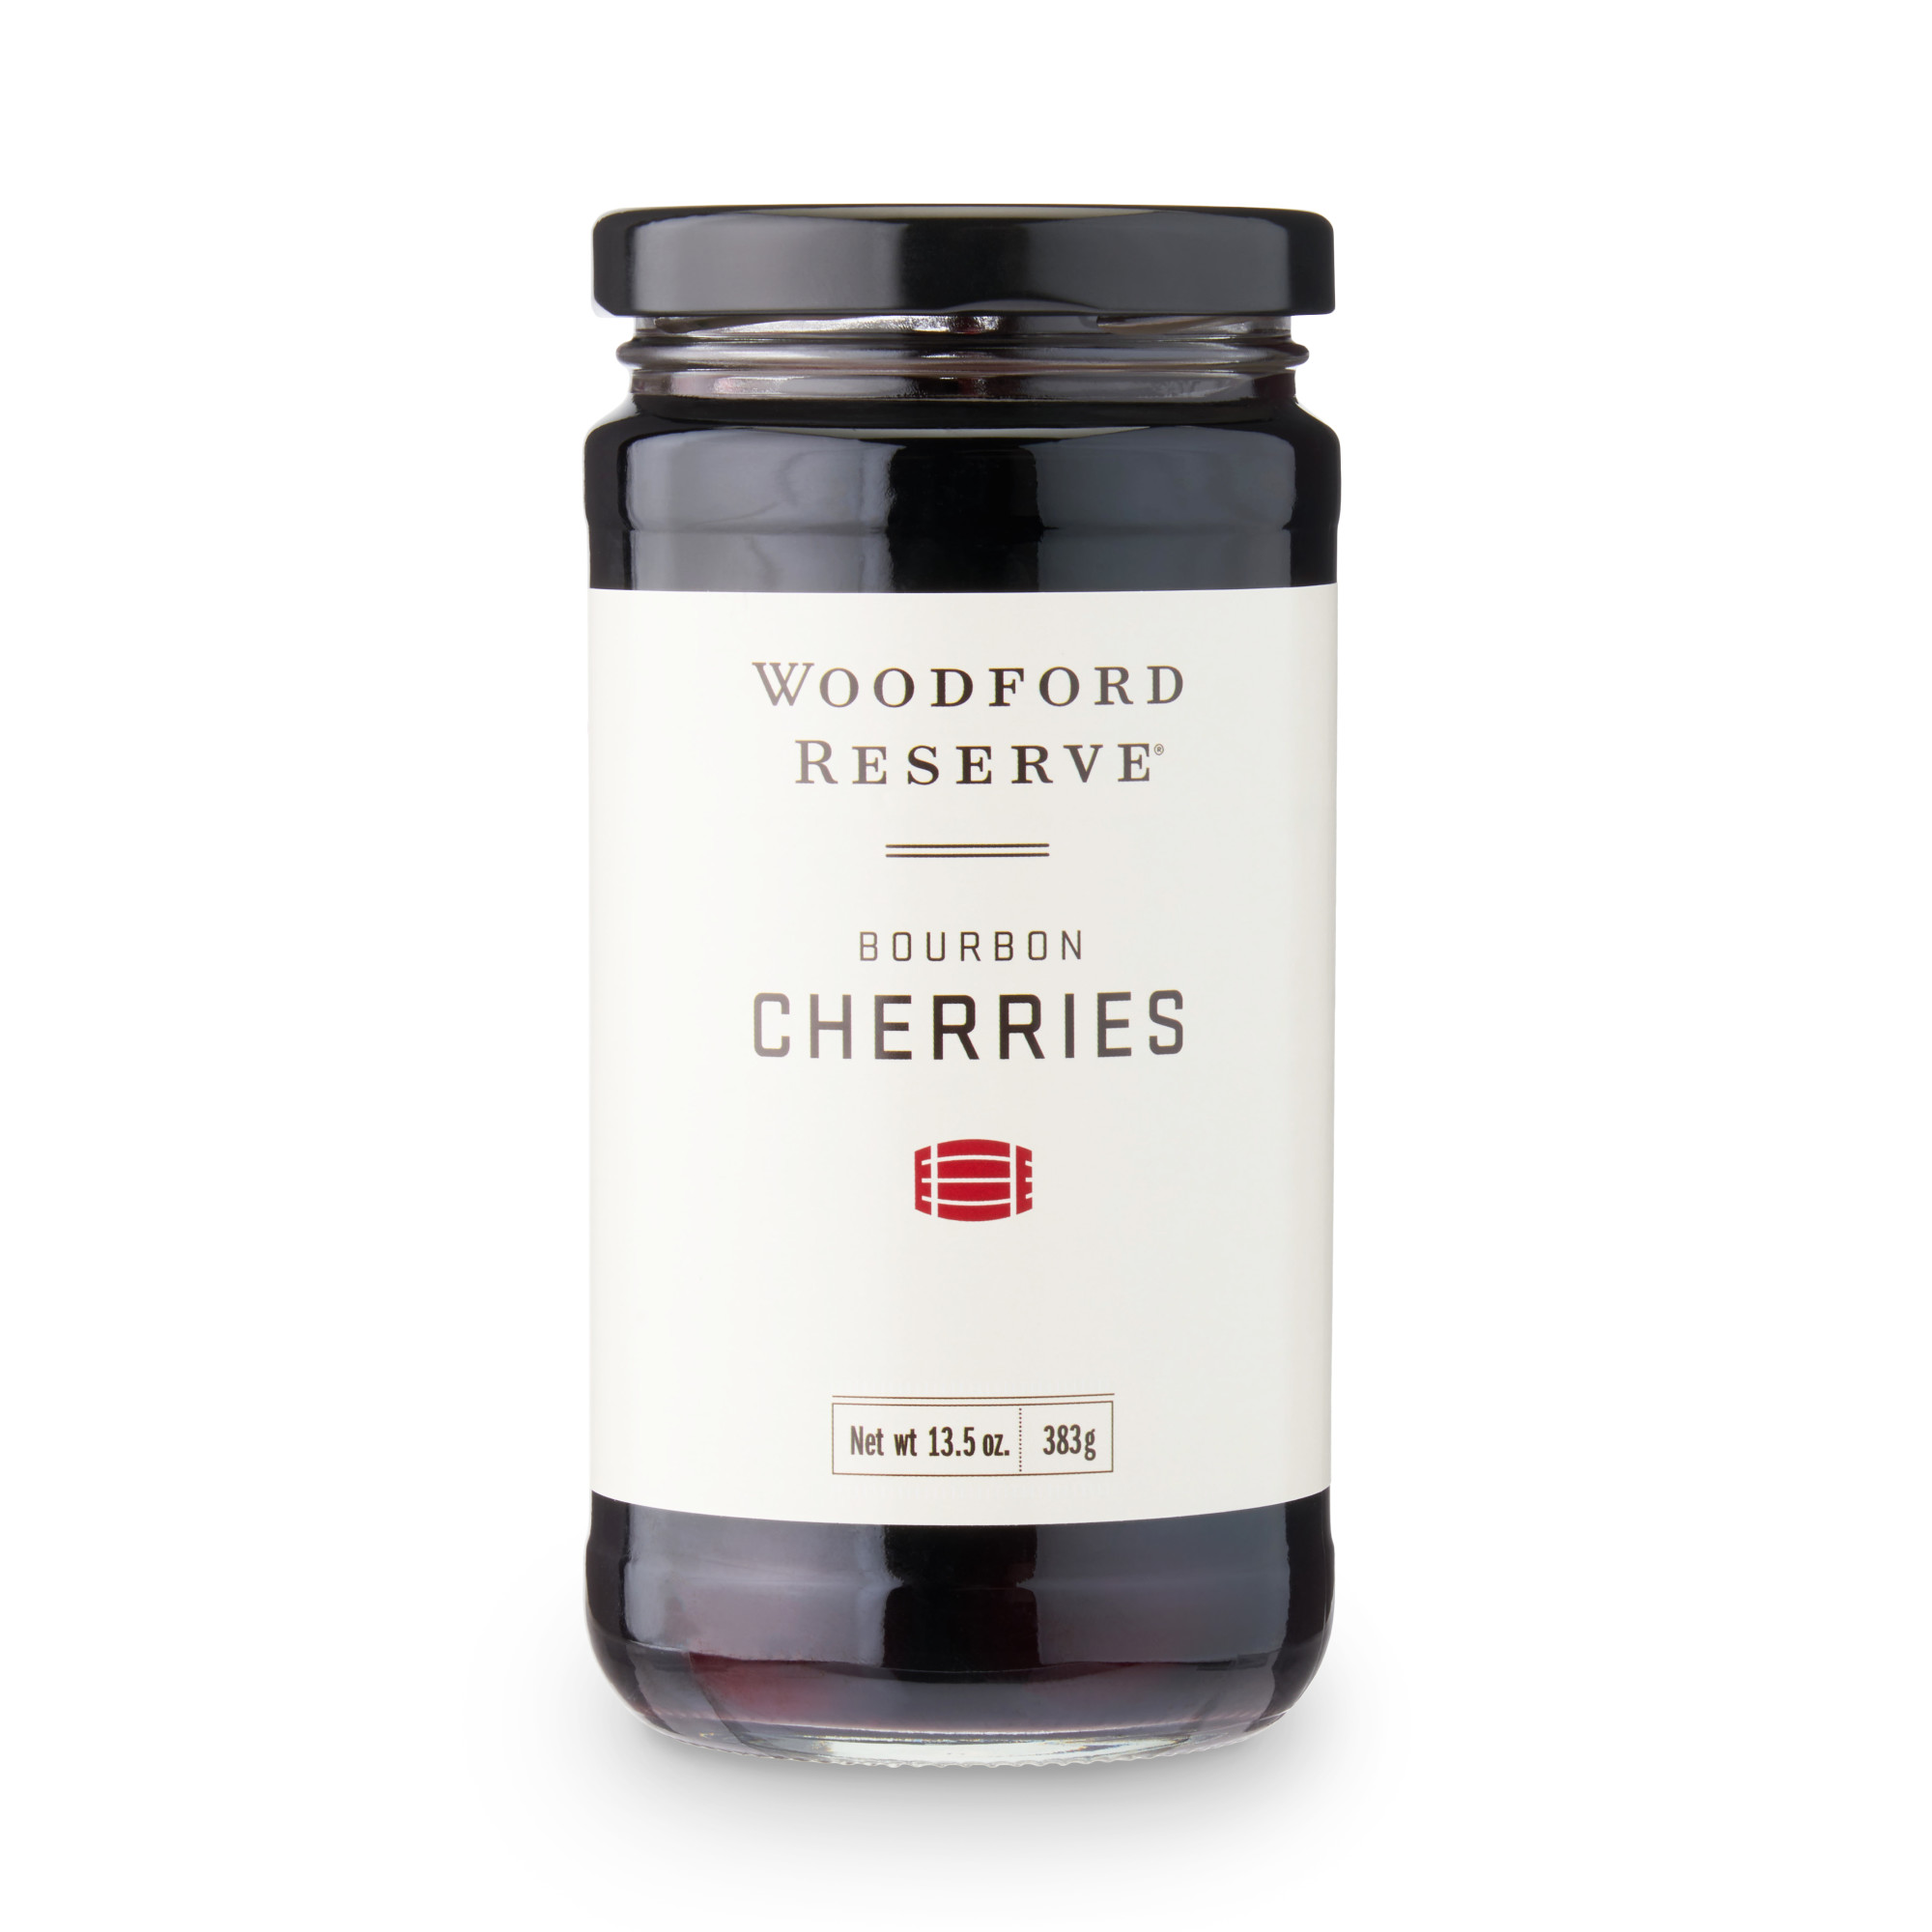 Woodford Reserve Bourbon Cherries - image 1 of 1